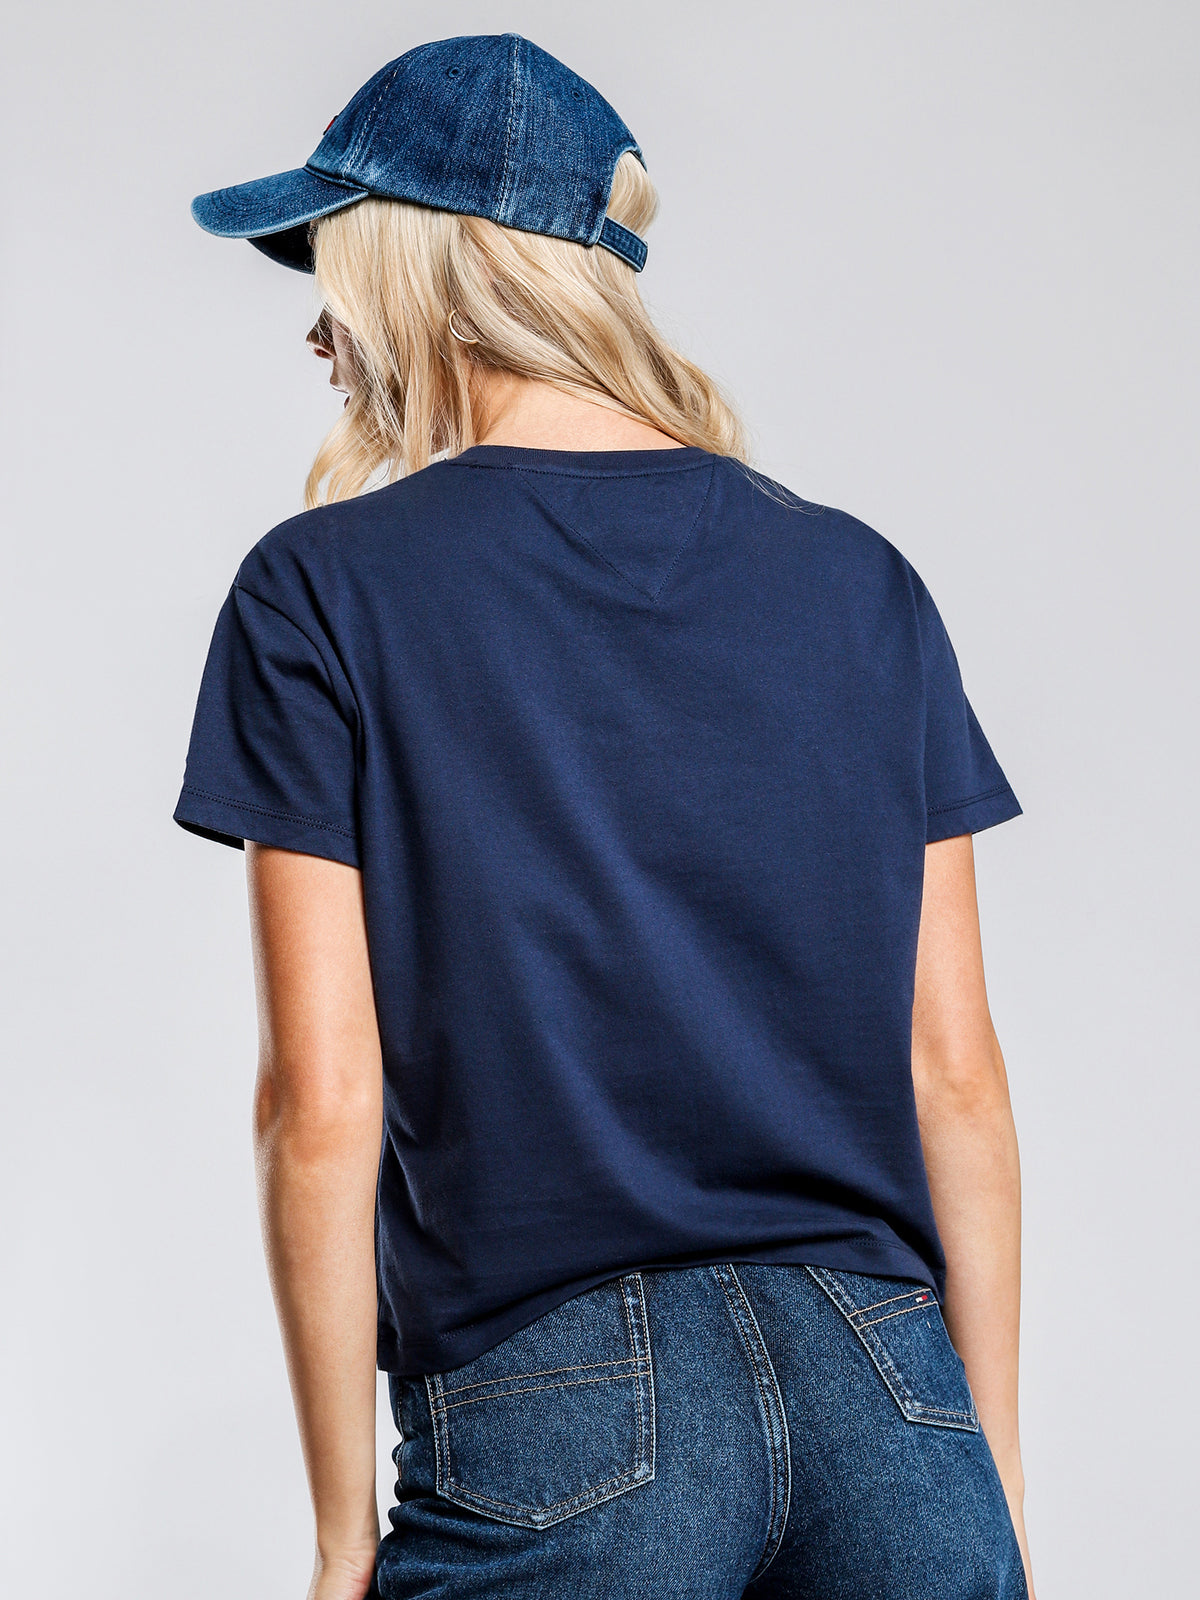 Tommy Hilfiger Linear Logo T-Shirt in Iris Blue | Navy